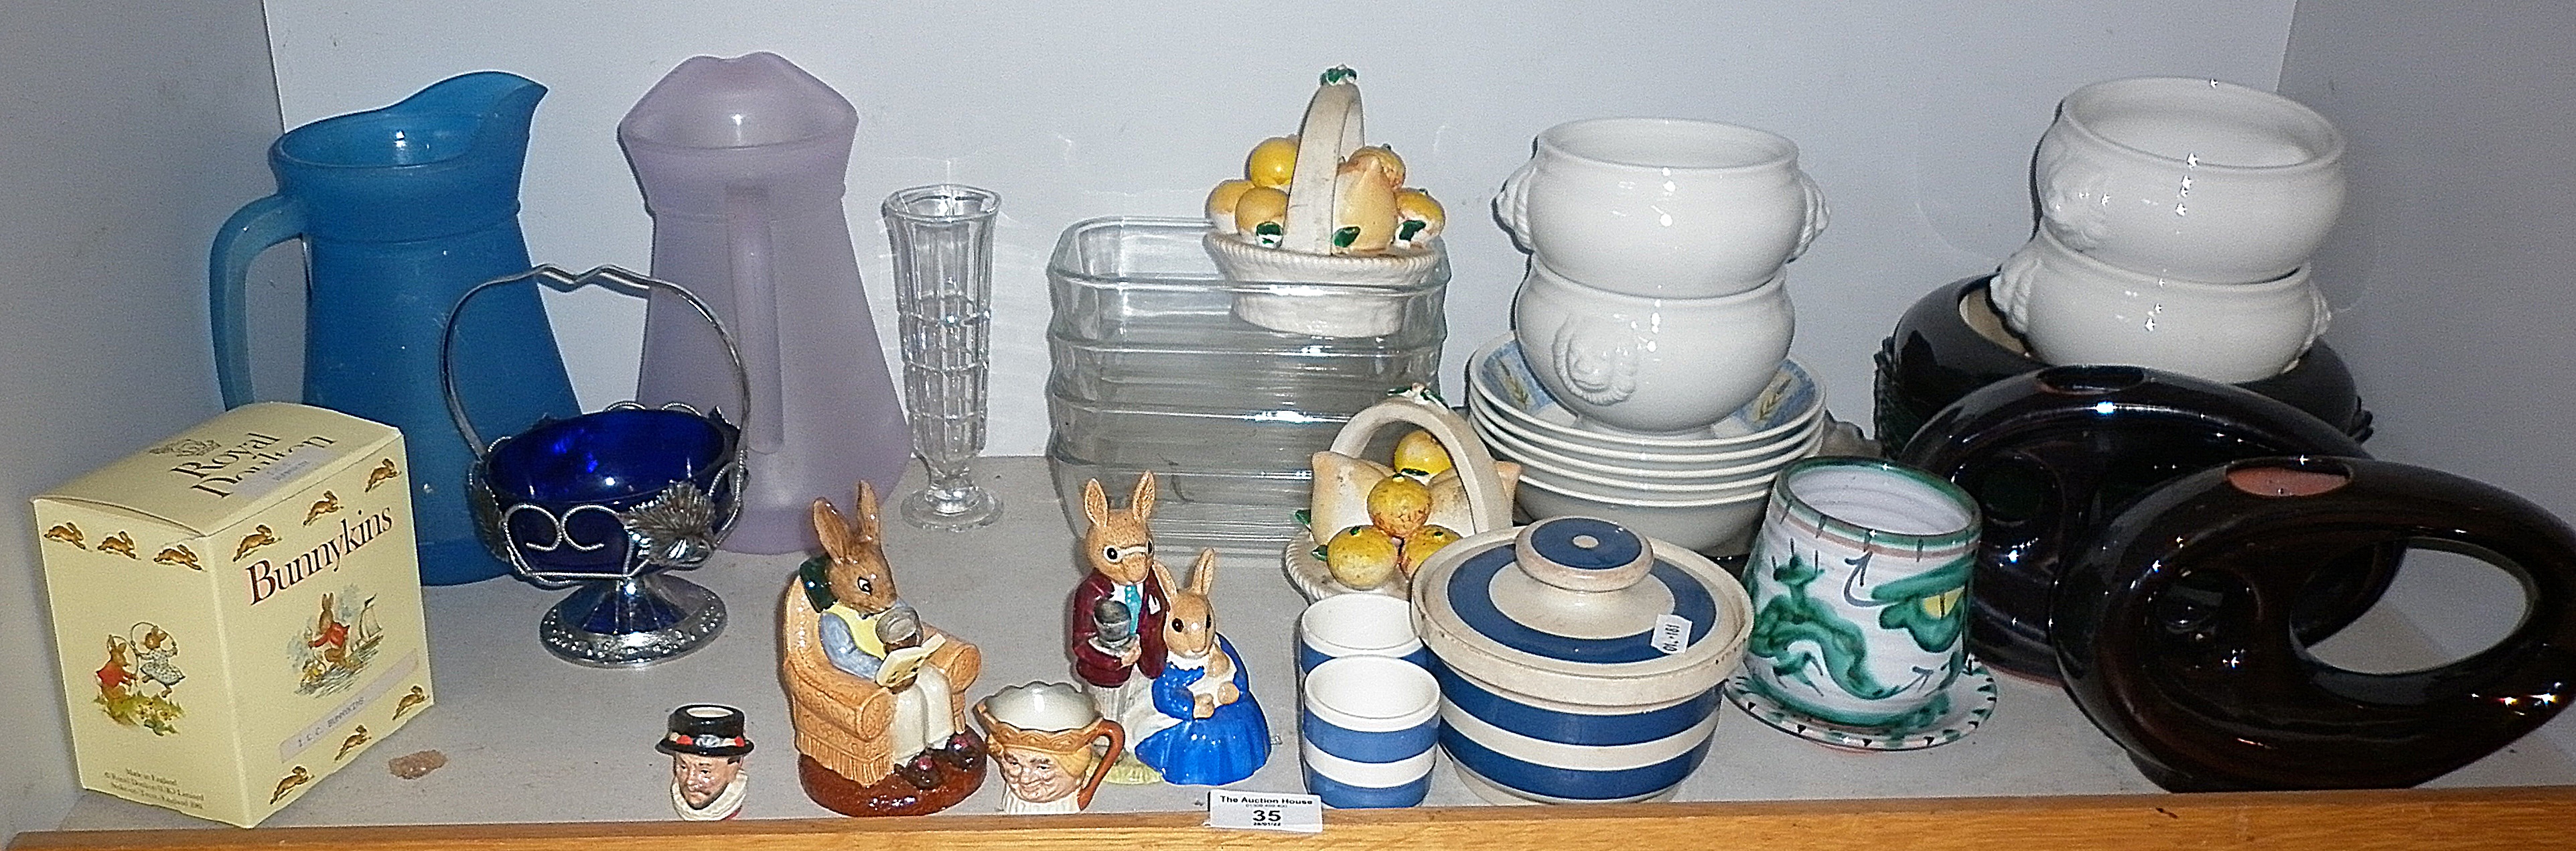 TG Green Cornishware egg cups, Royal Doulton Bunnykins figures and some glassware